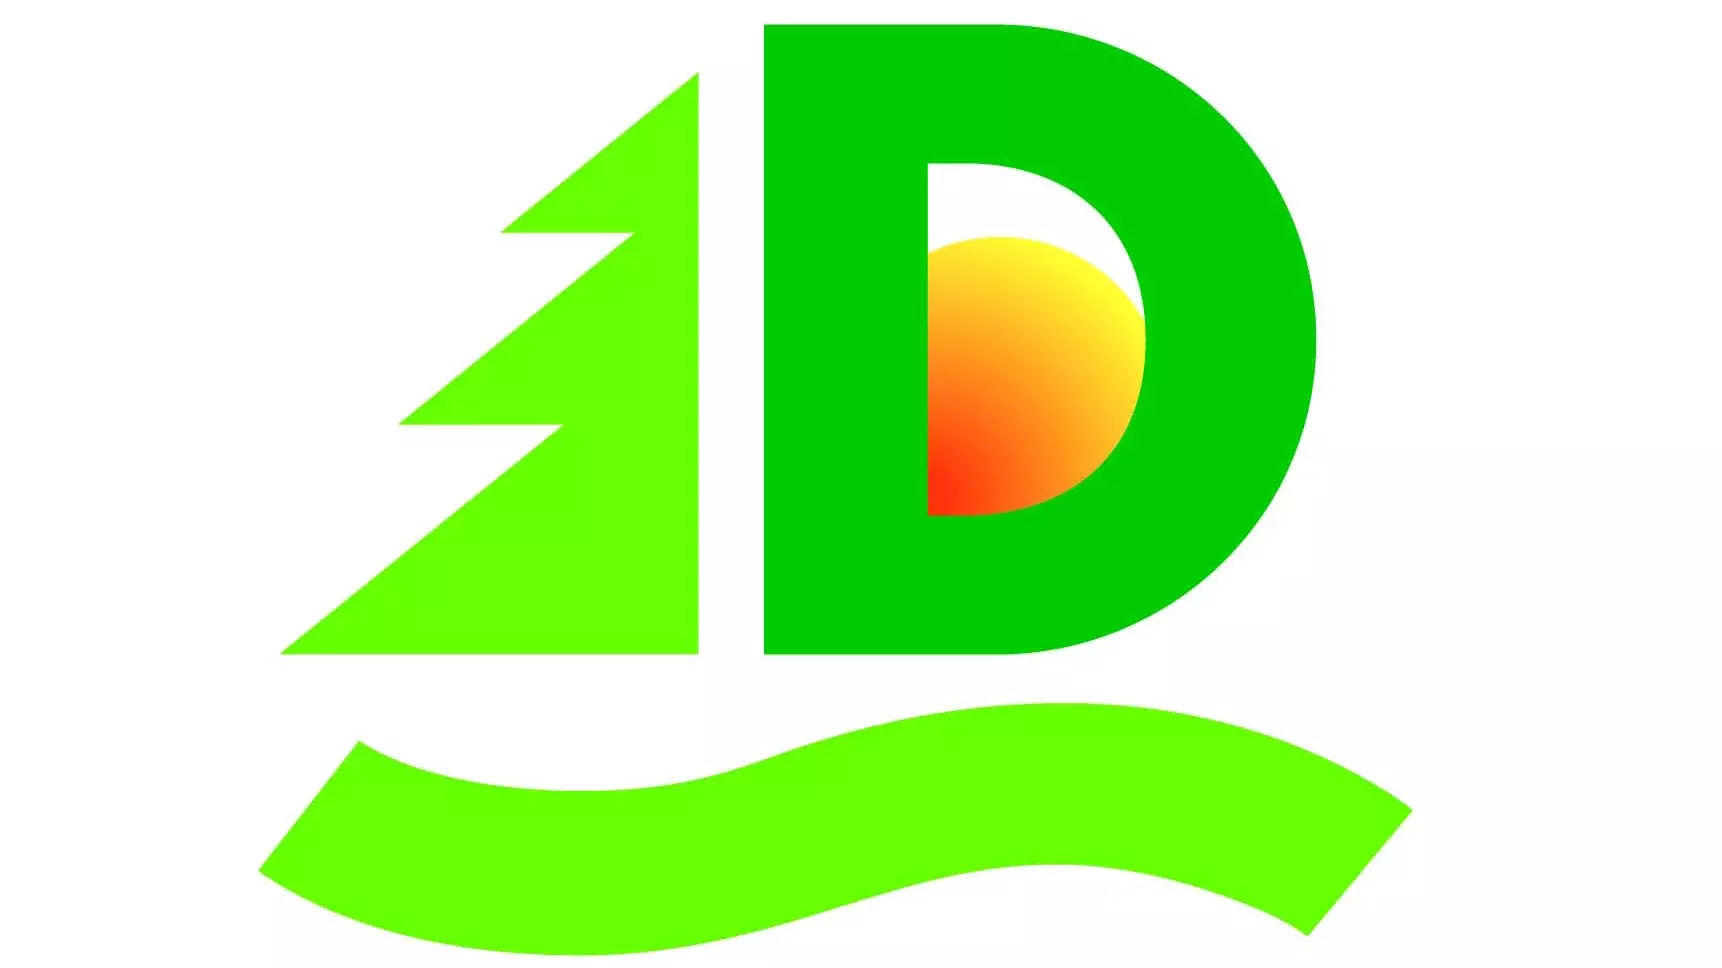 Logo Deckenpfronn